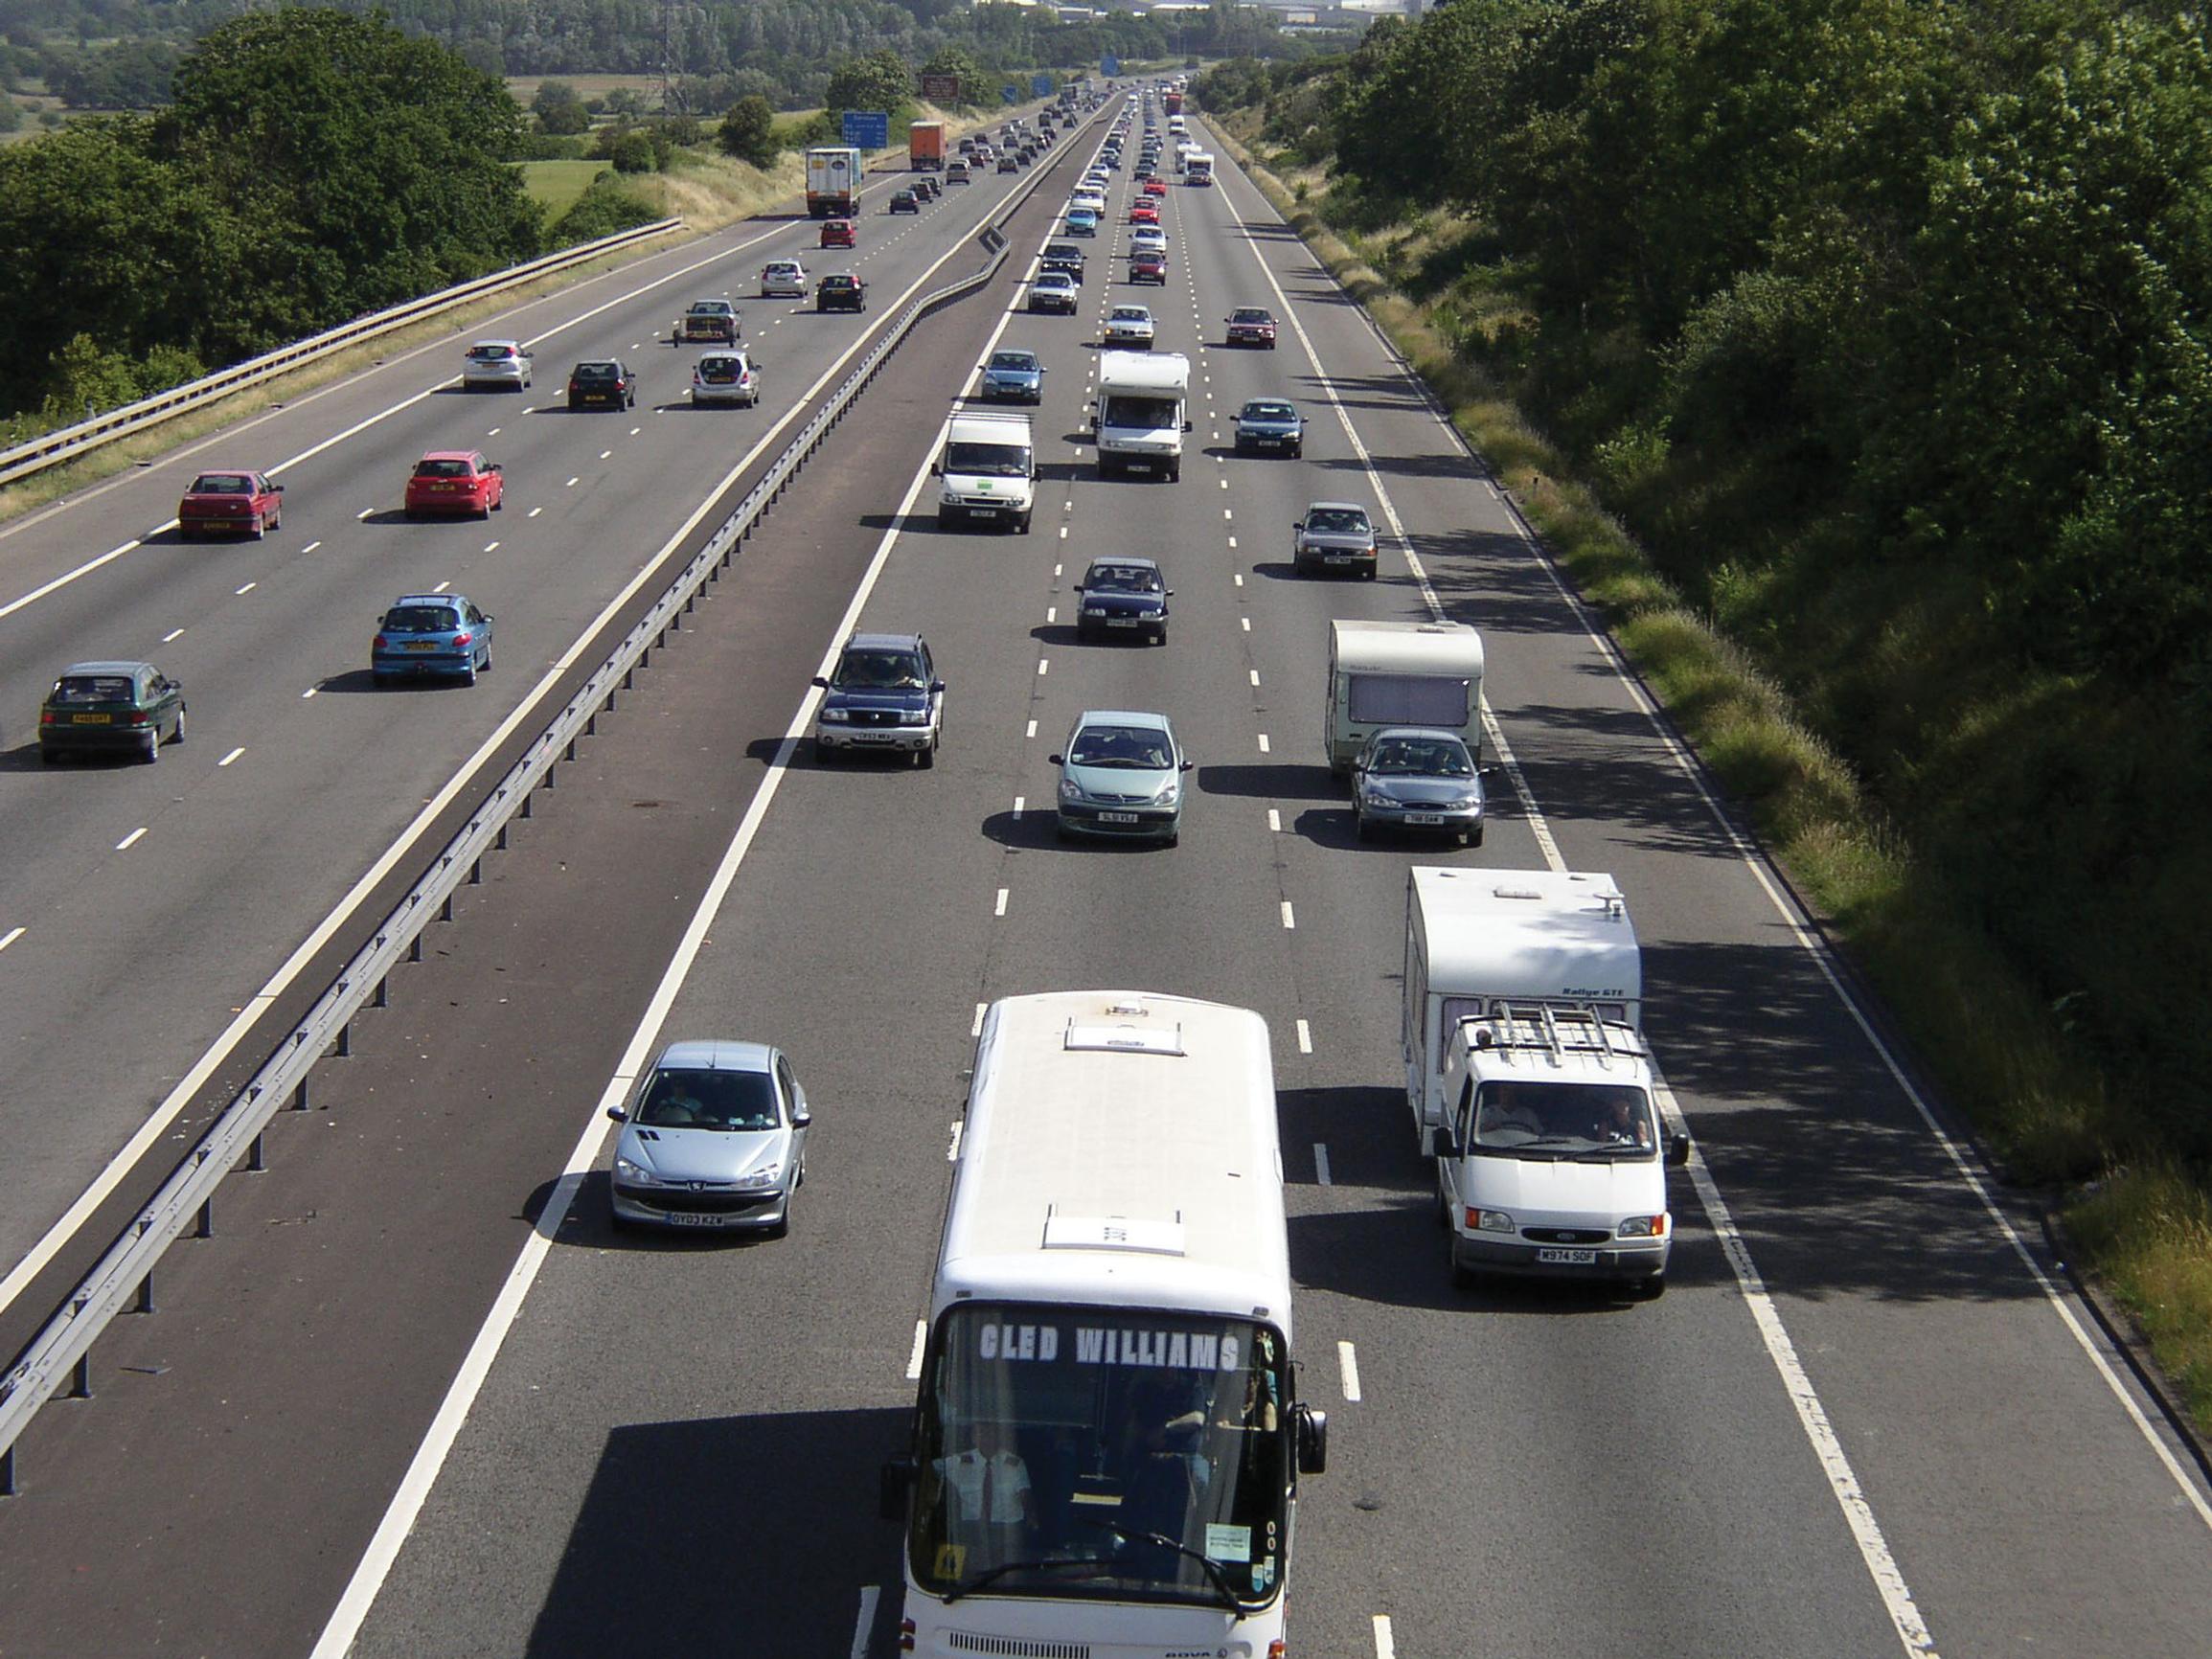 DfT plans to convert 300 miles of hard shoulder to running lanes